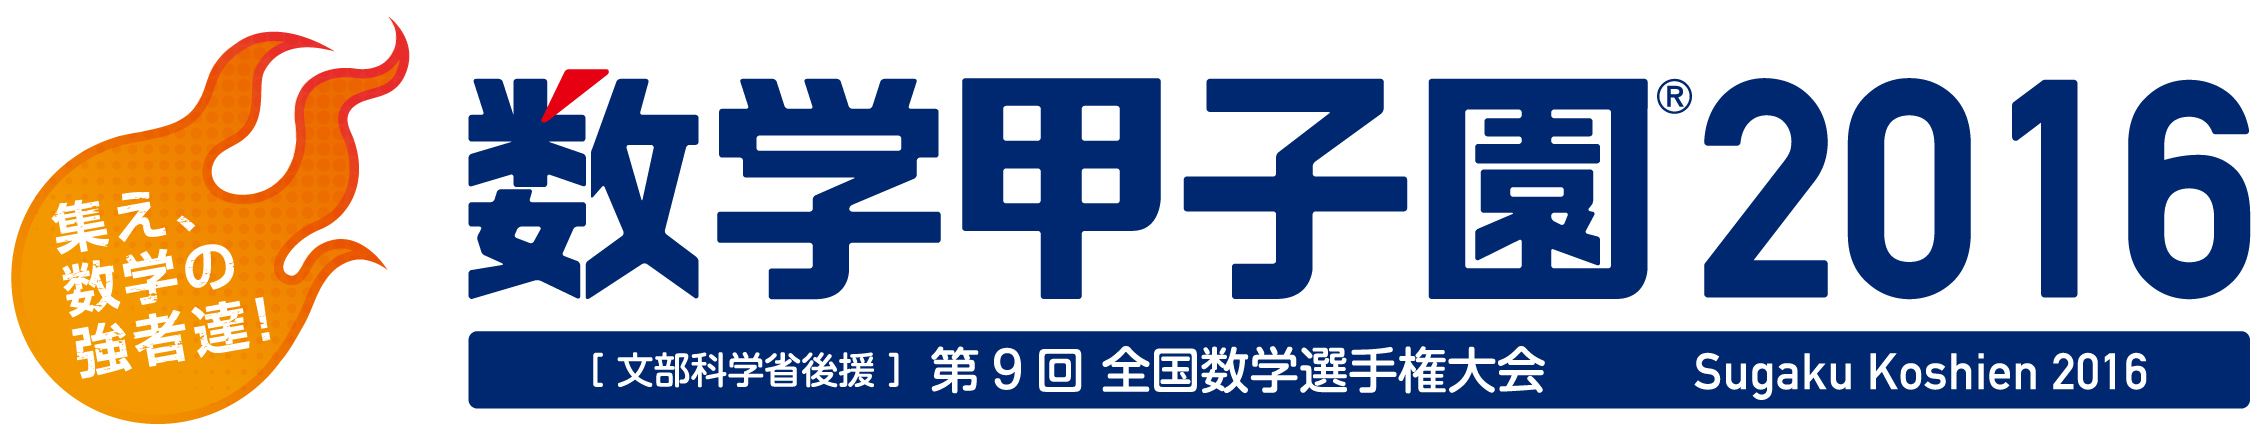 「数学甲子園2016」ロゴ